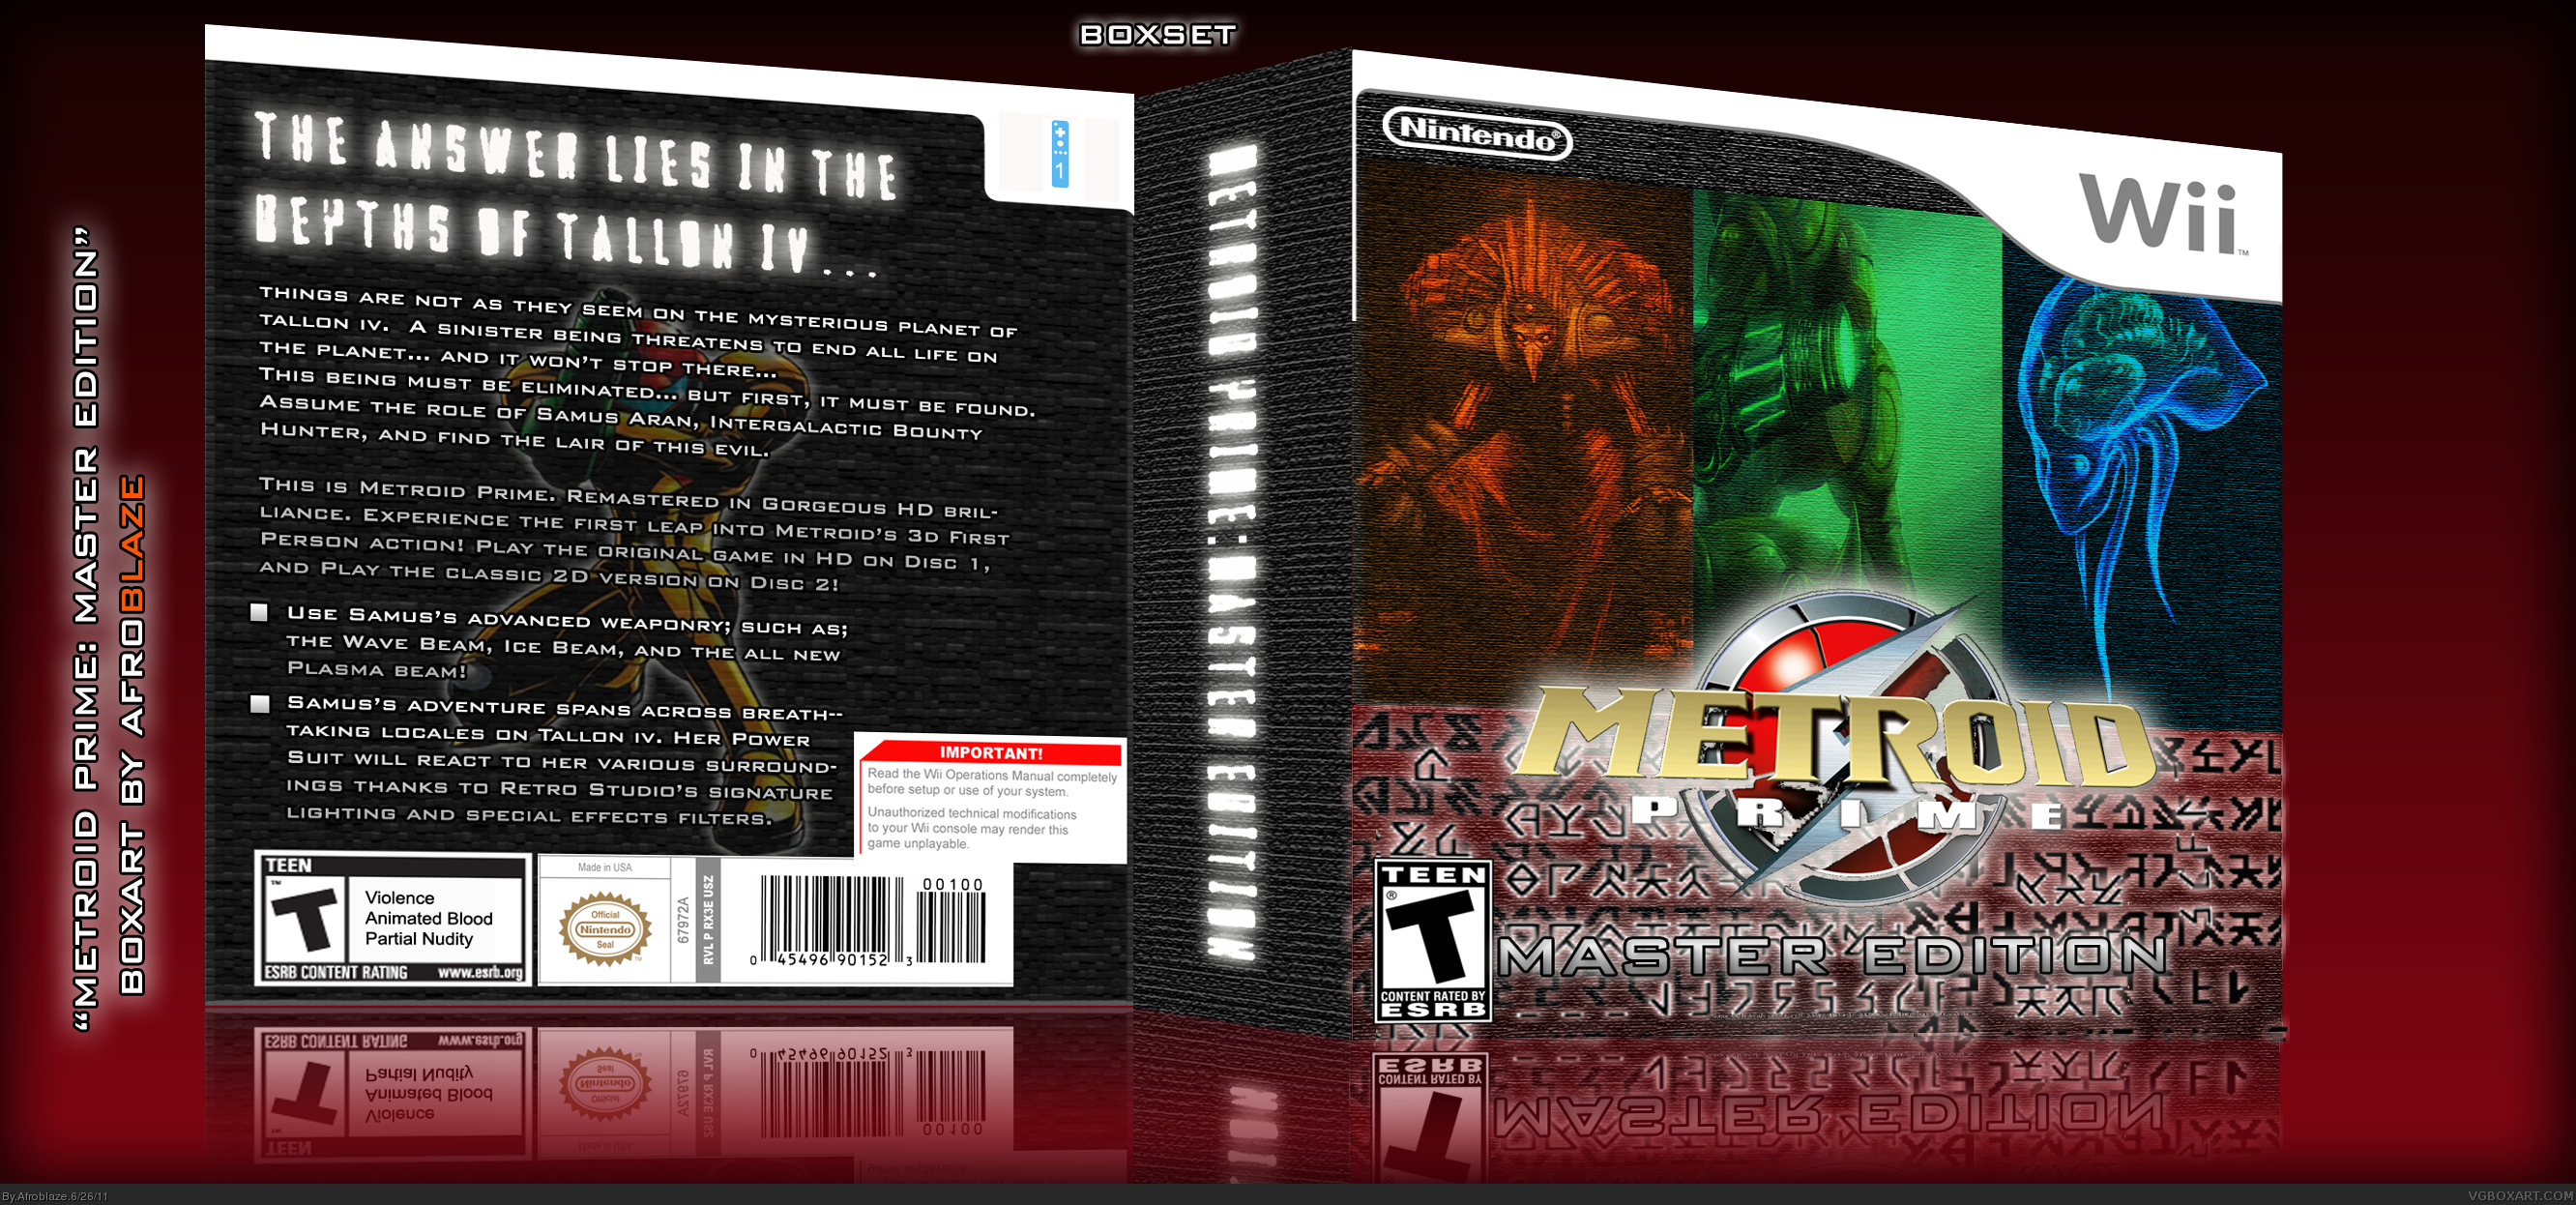 Metroid Prime: Master Edition box cover